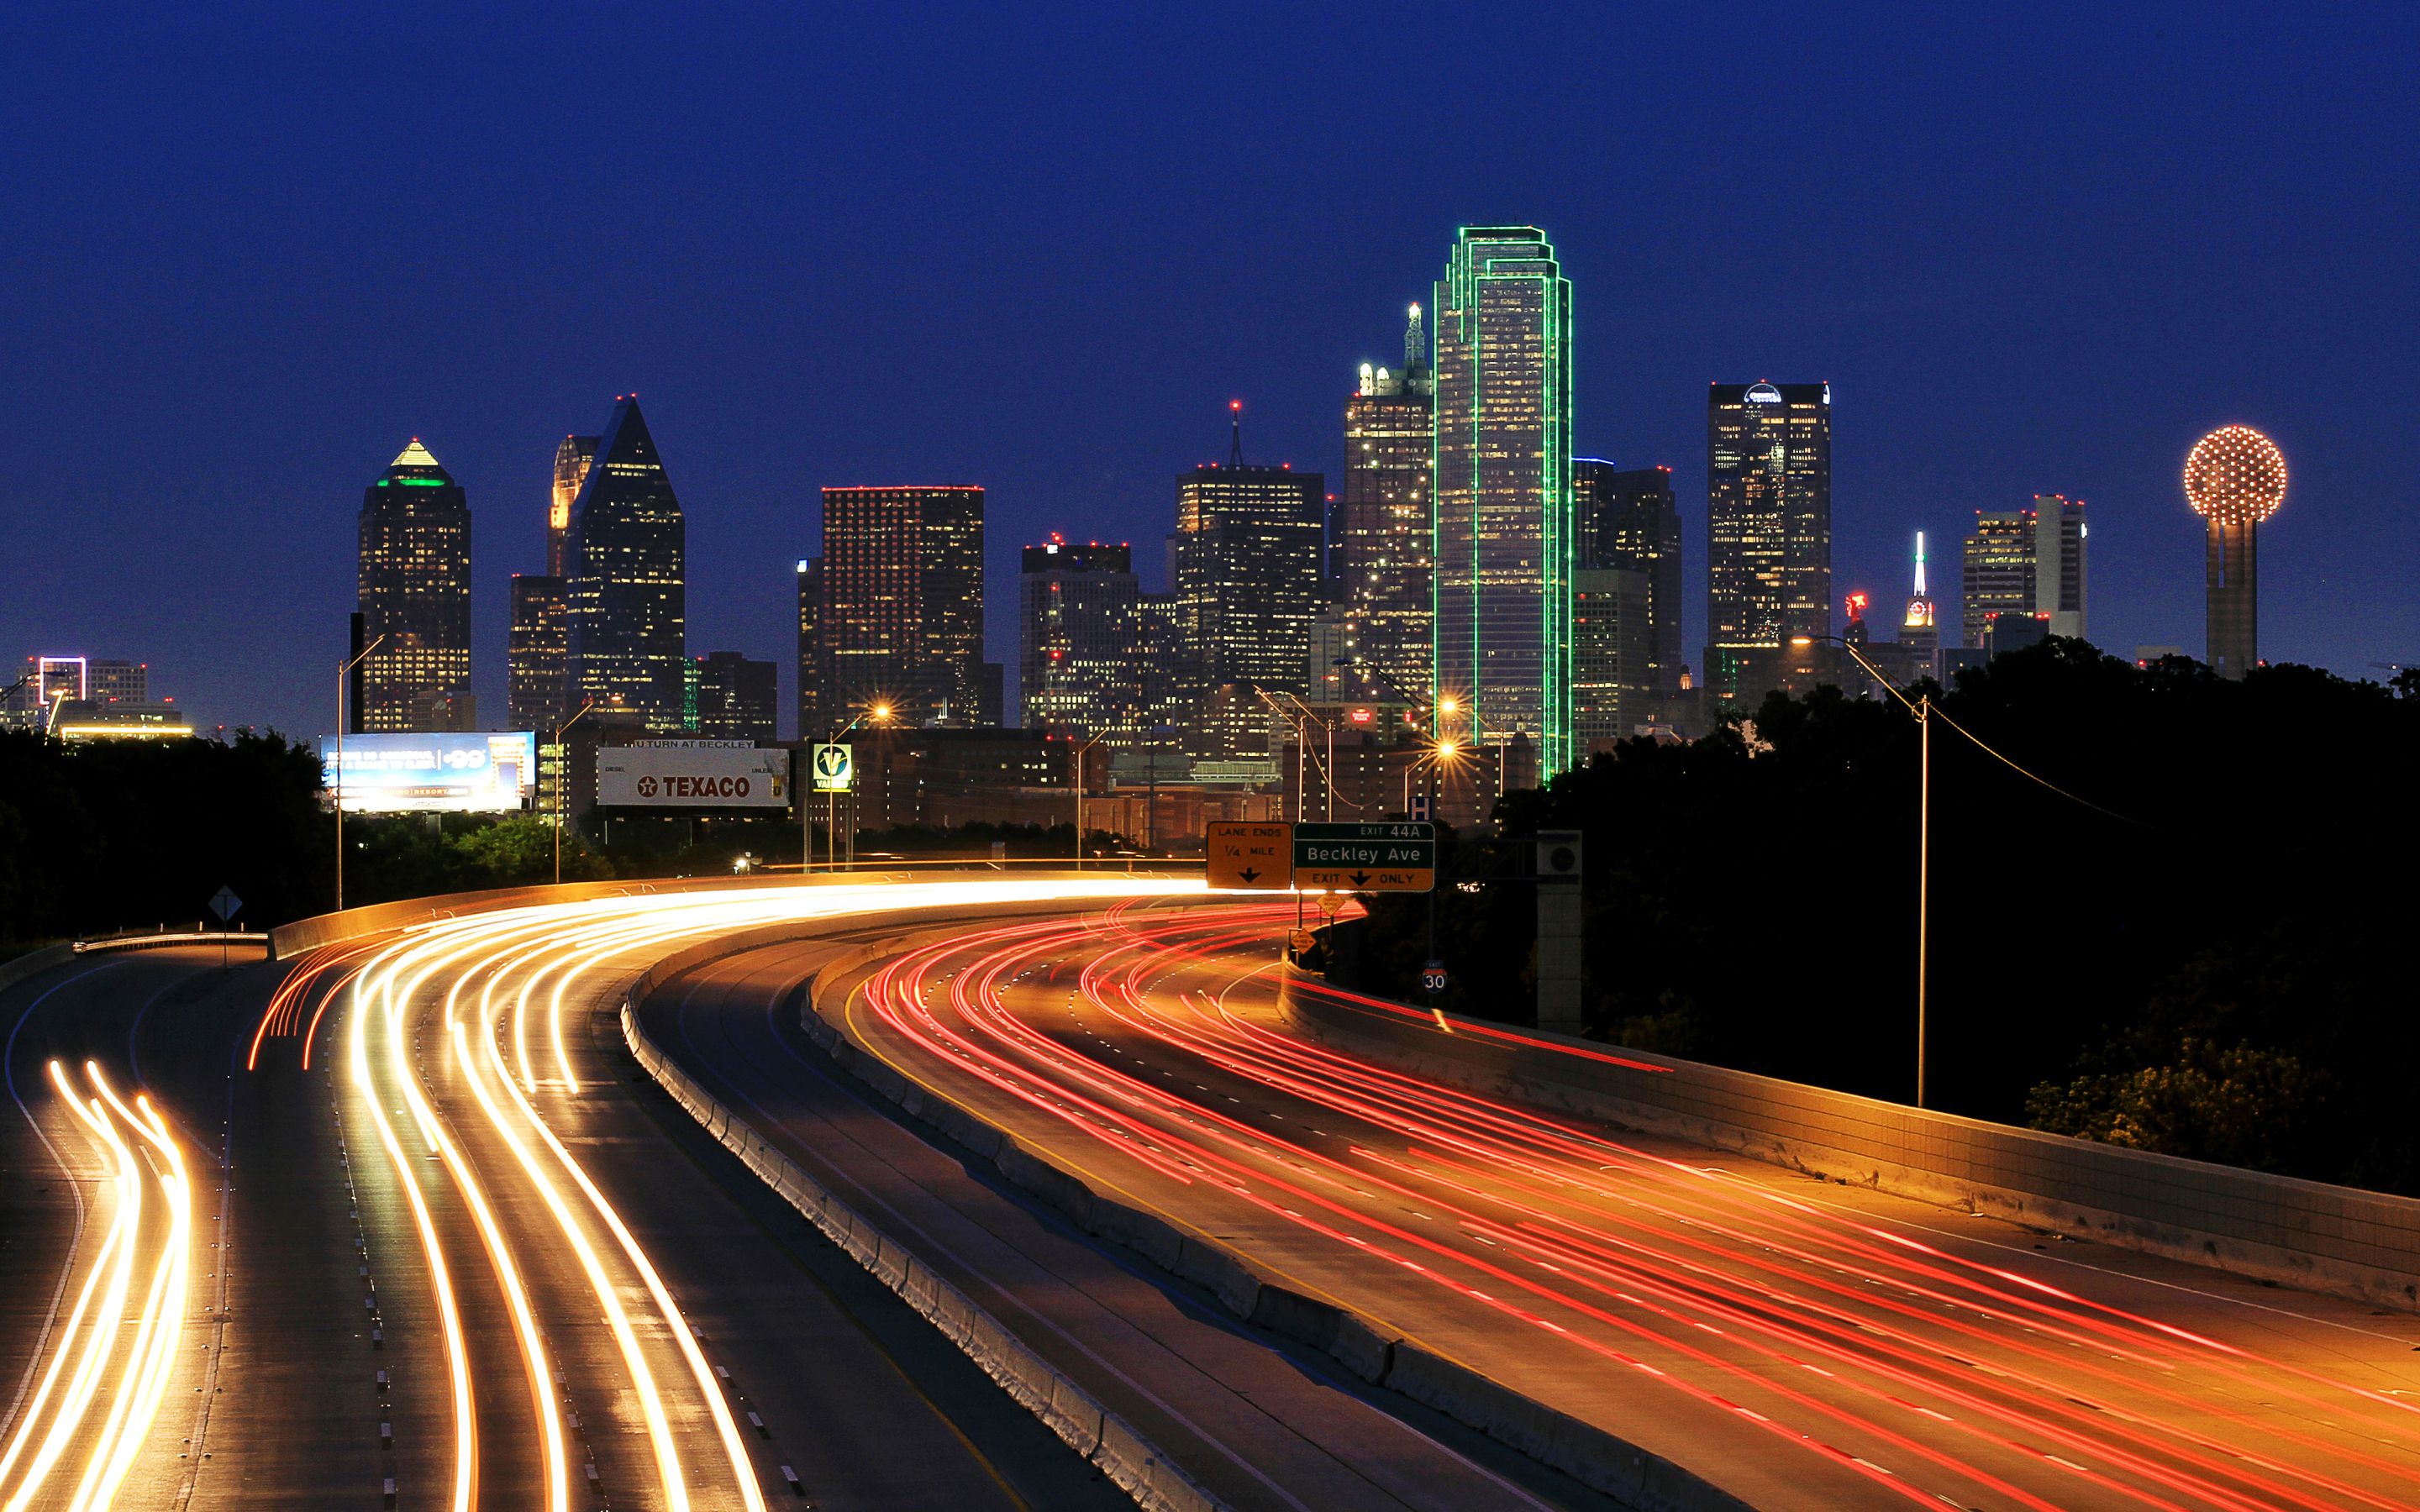 Dallas Texas Lights Skyscrapers Macbook Pro Retina Wallpaper, HD City 4K Wallpaper, Image, Photo and Background